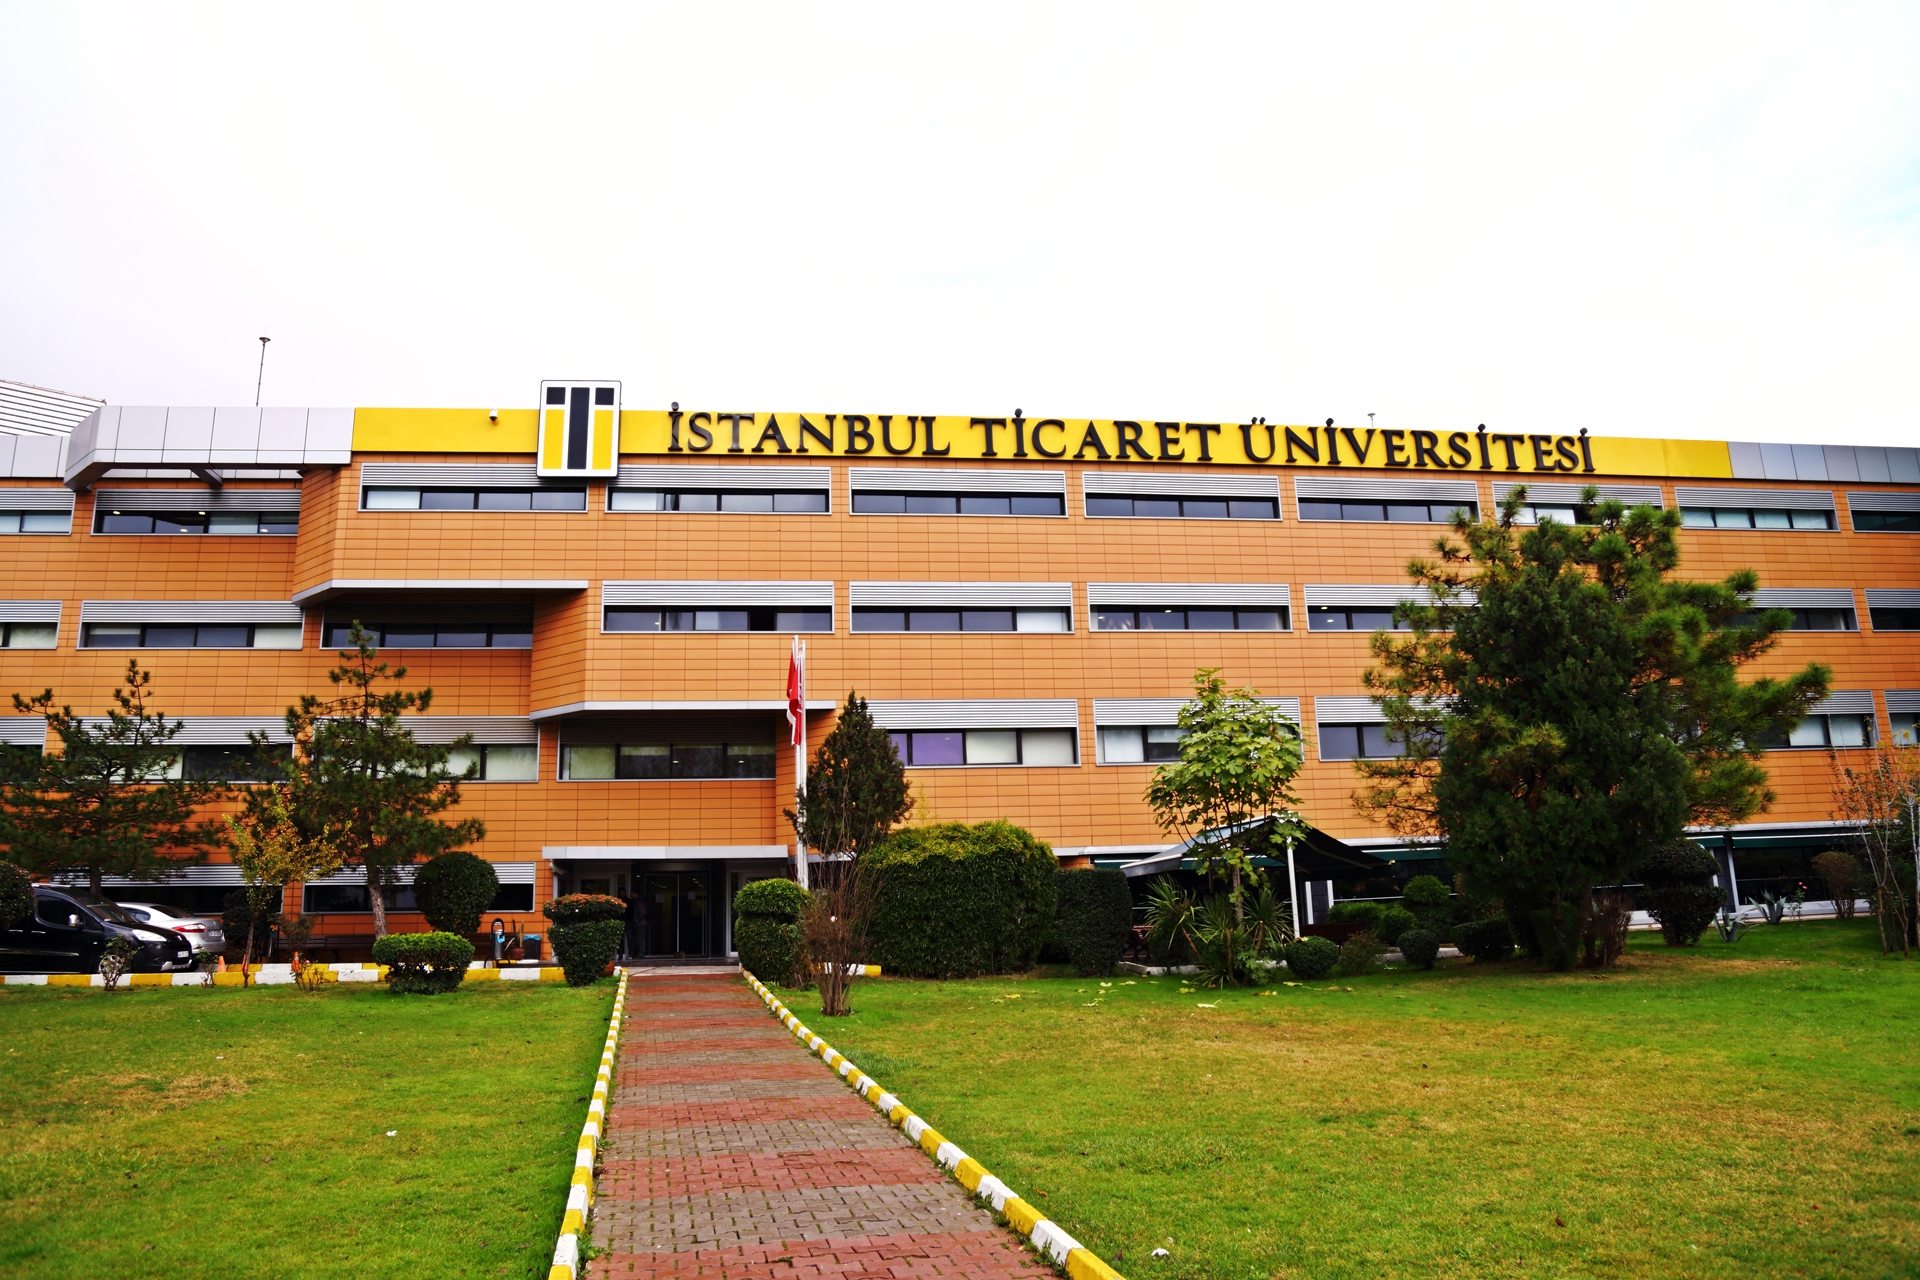 ticaret universitesi find and study 2 - İstanbul Ticaret Üniversitesi